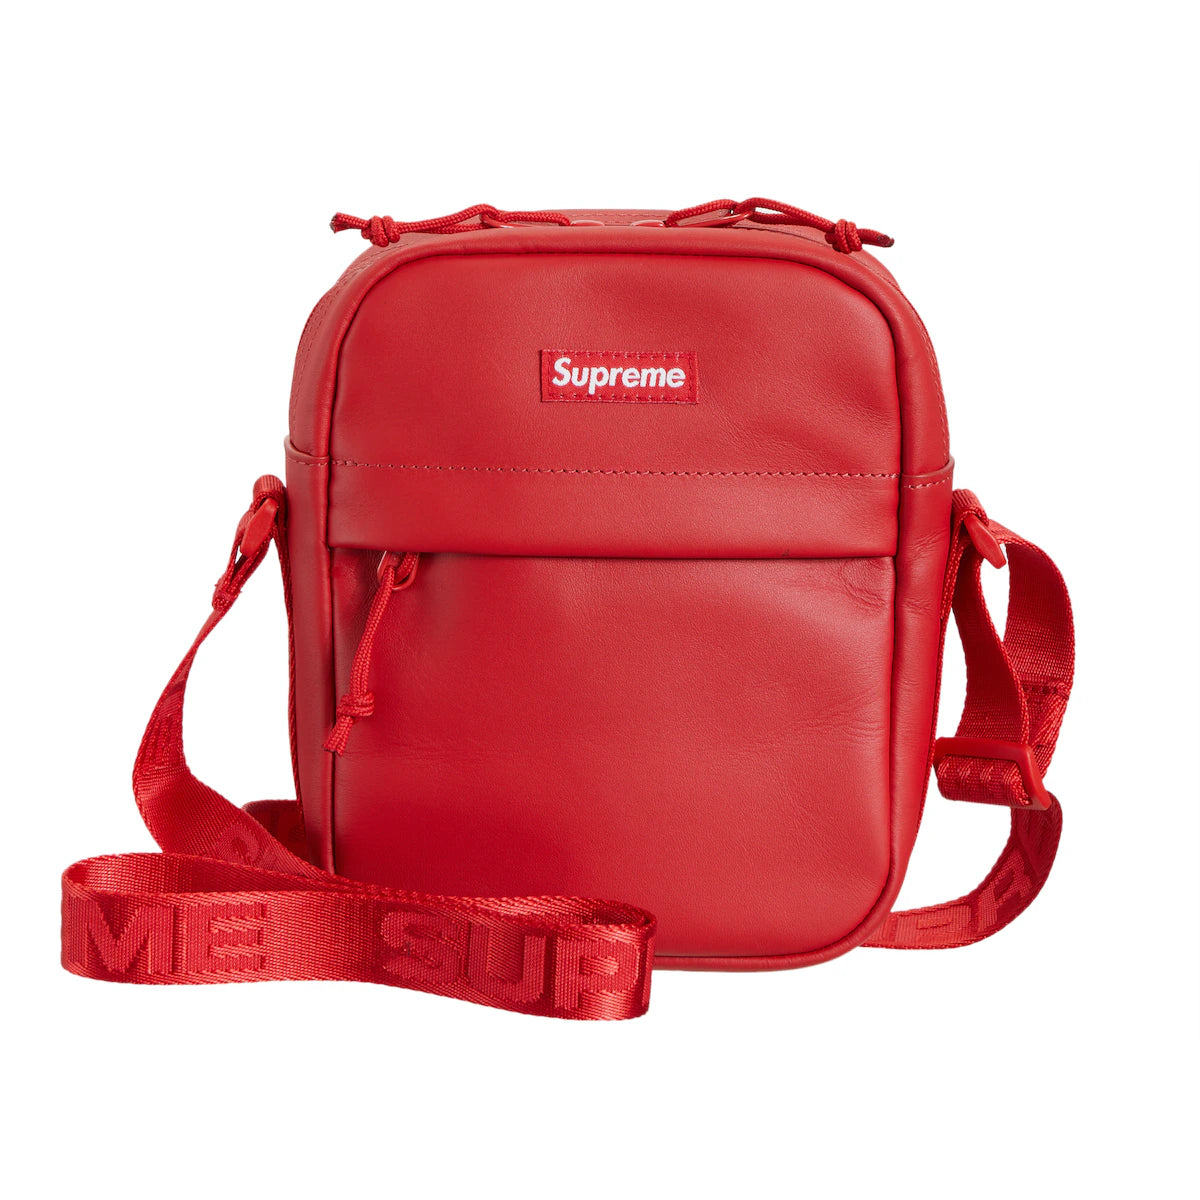 Leather Red Supreme Bag